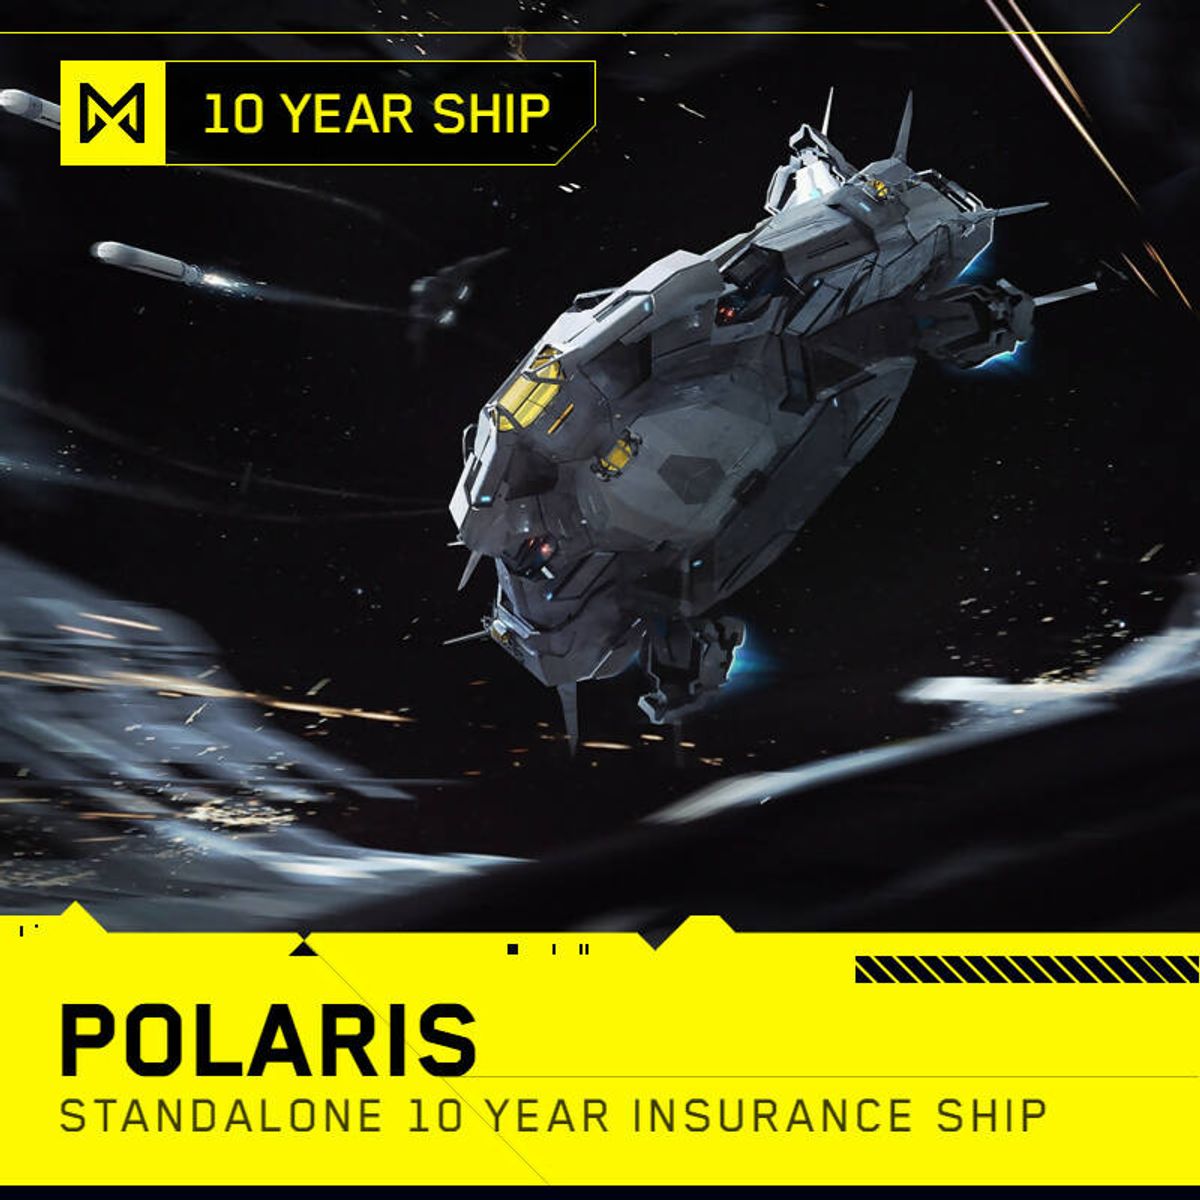 Polaris - 10 Year